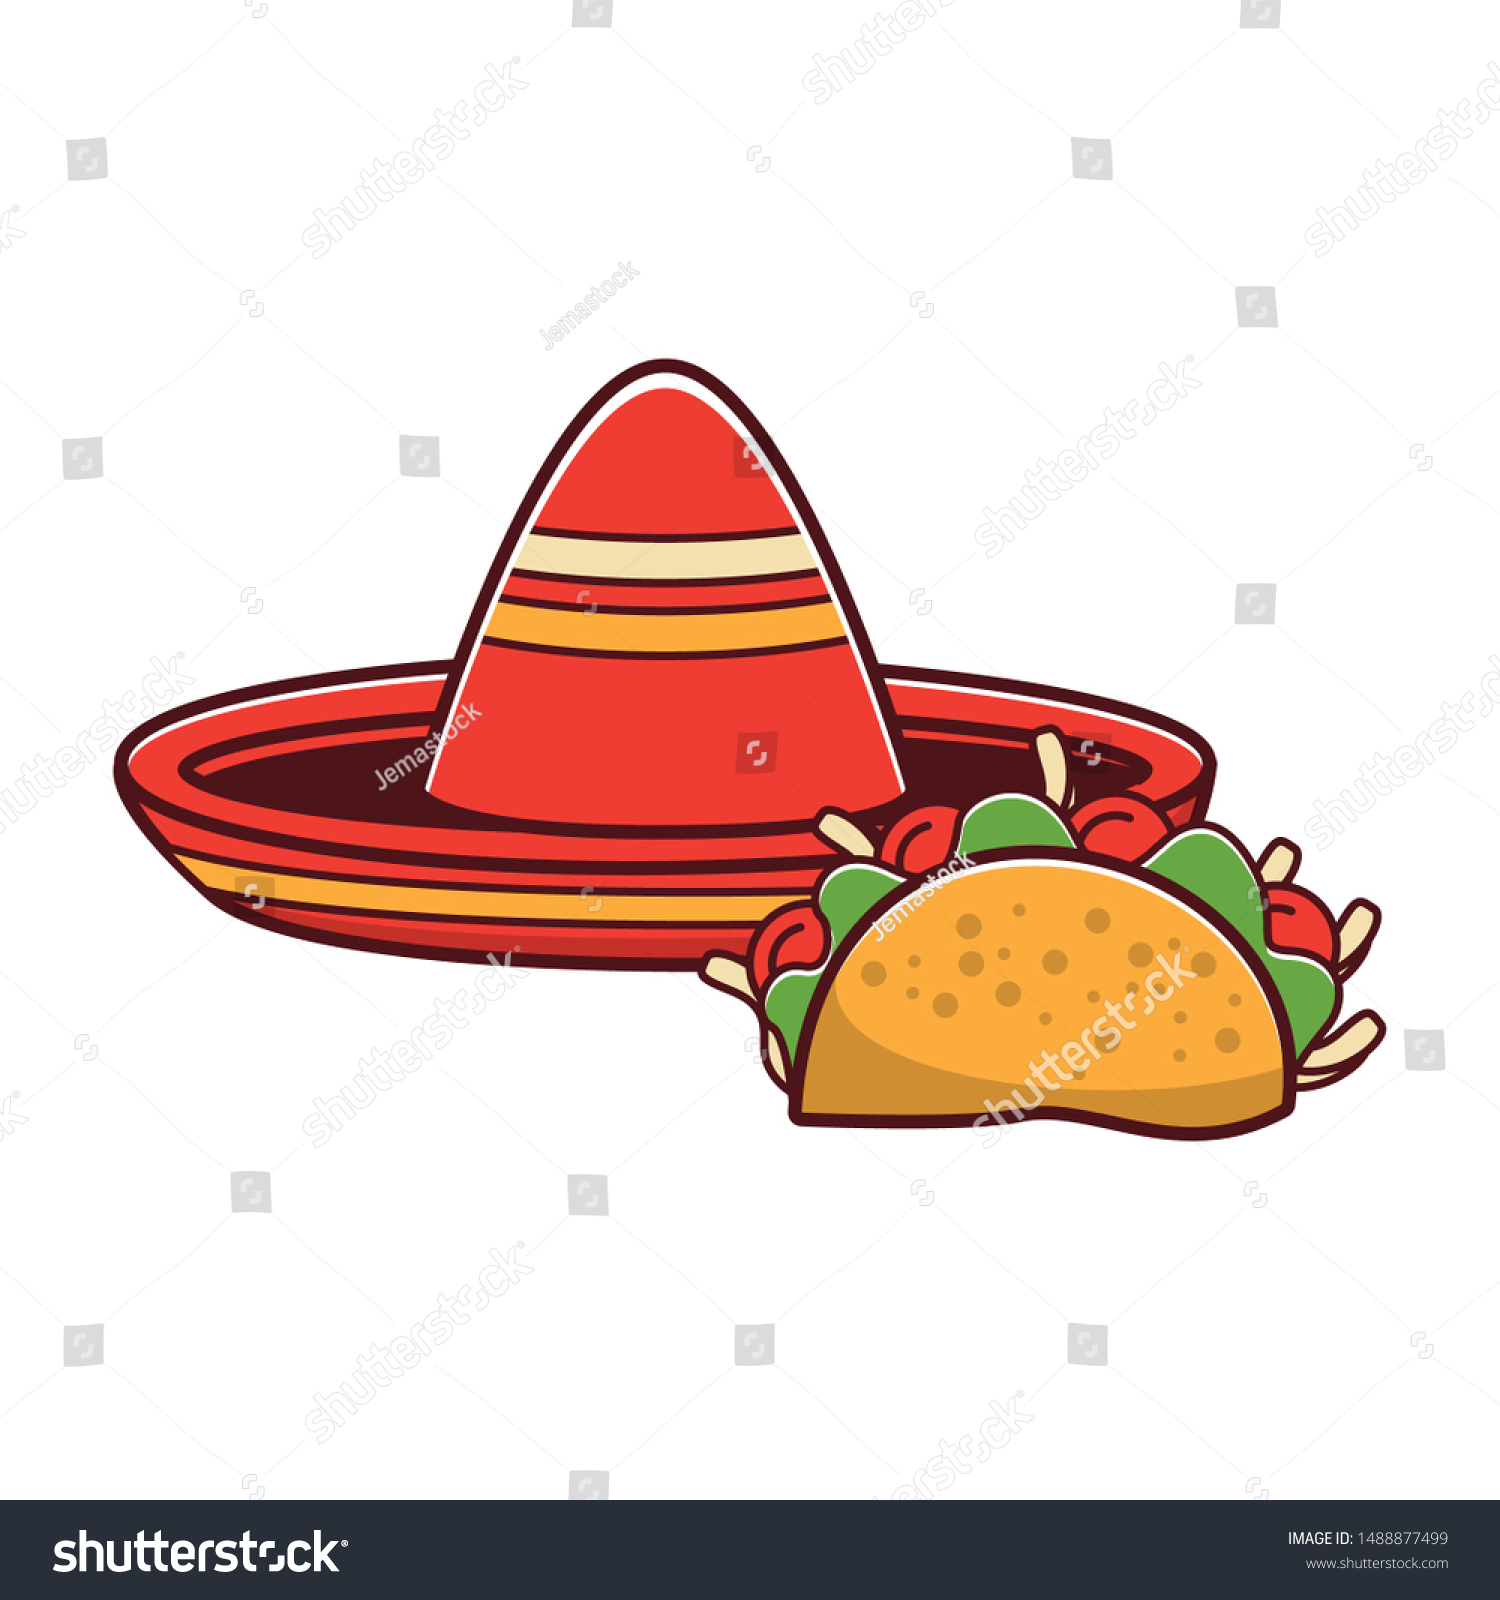 mariachi hat cartoon